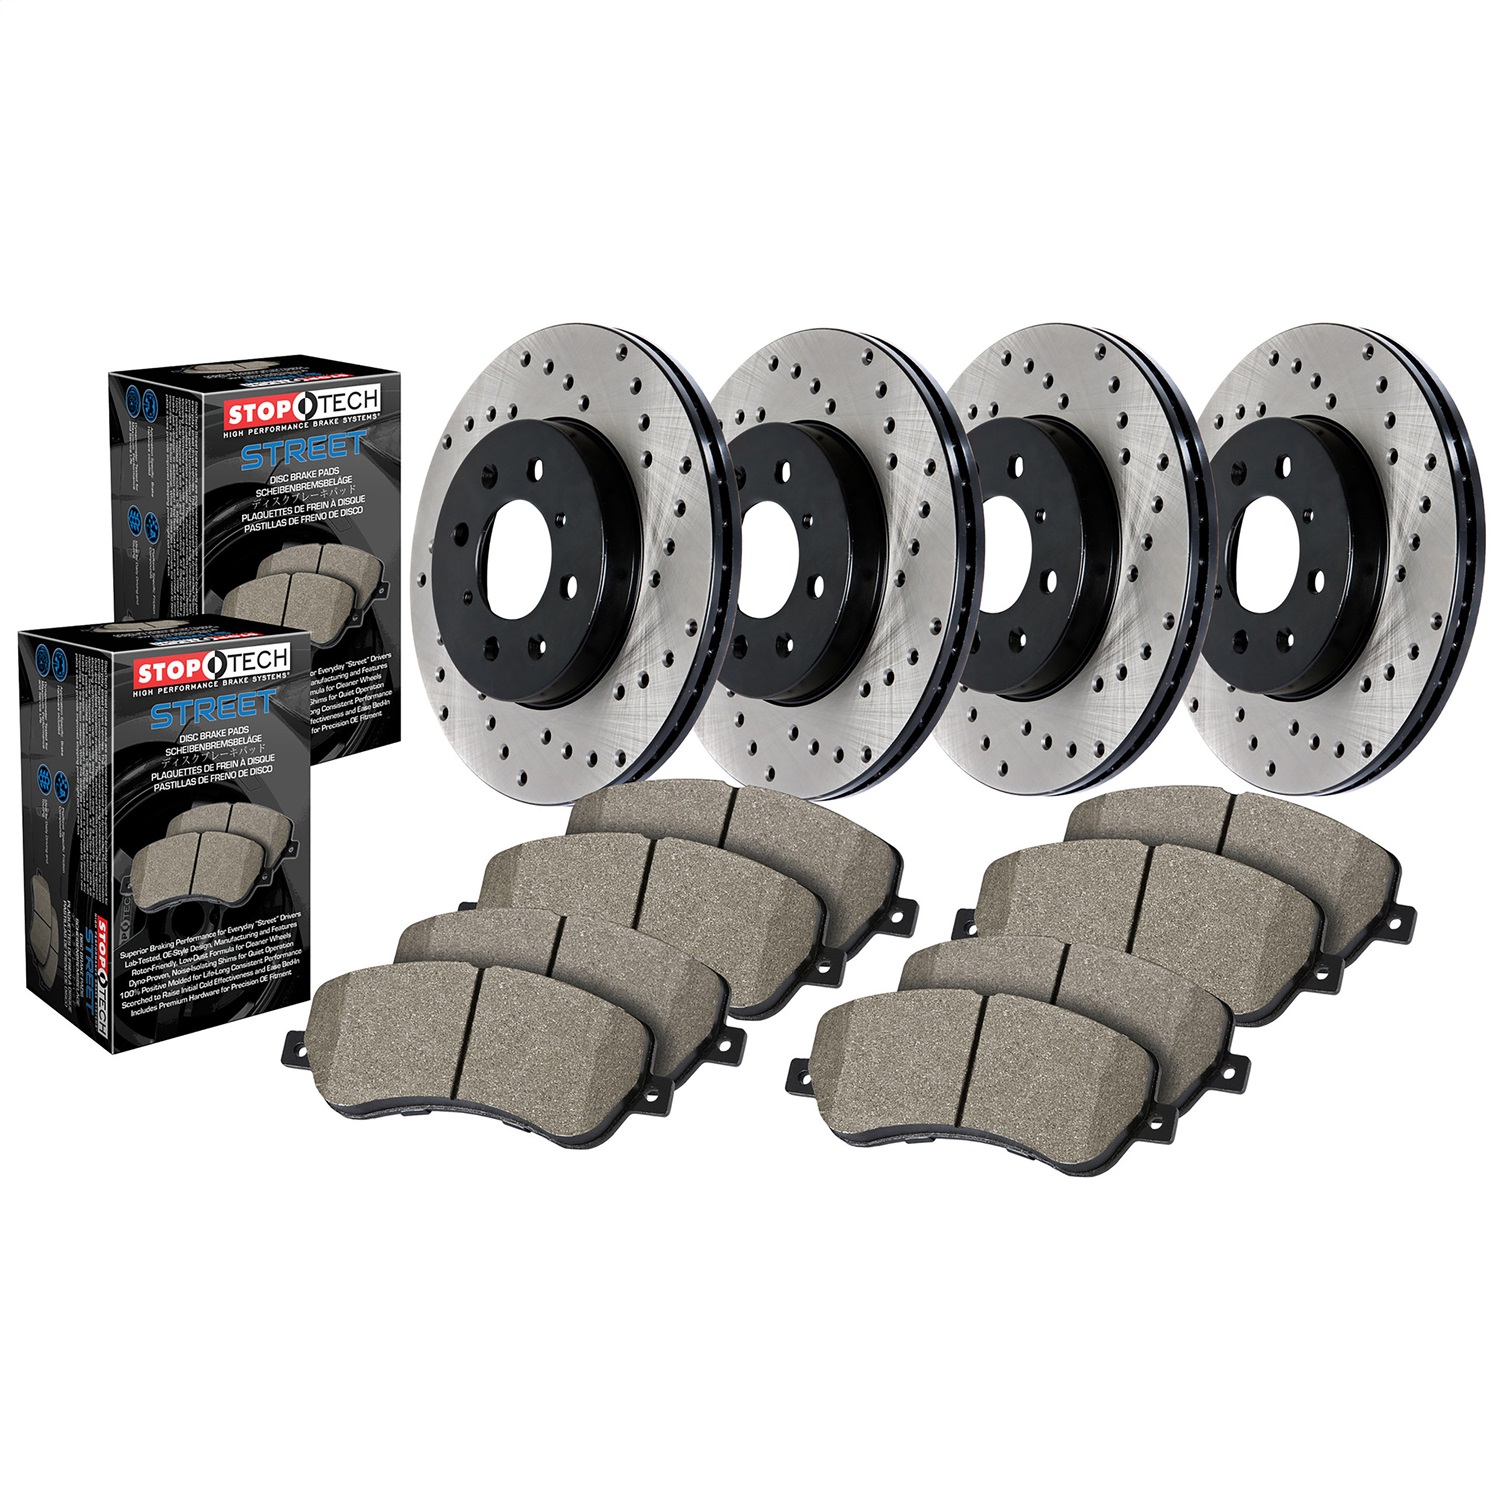 StopTech 936.40037 Street - 4 Wheel Disc Brake Kit w/Cross-Drilled Rotor